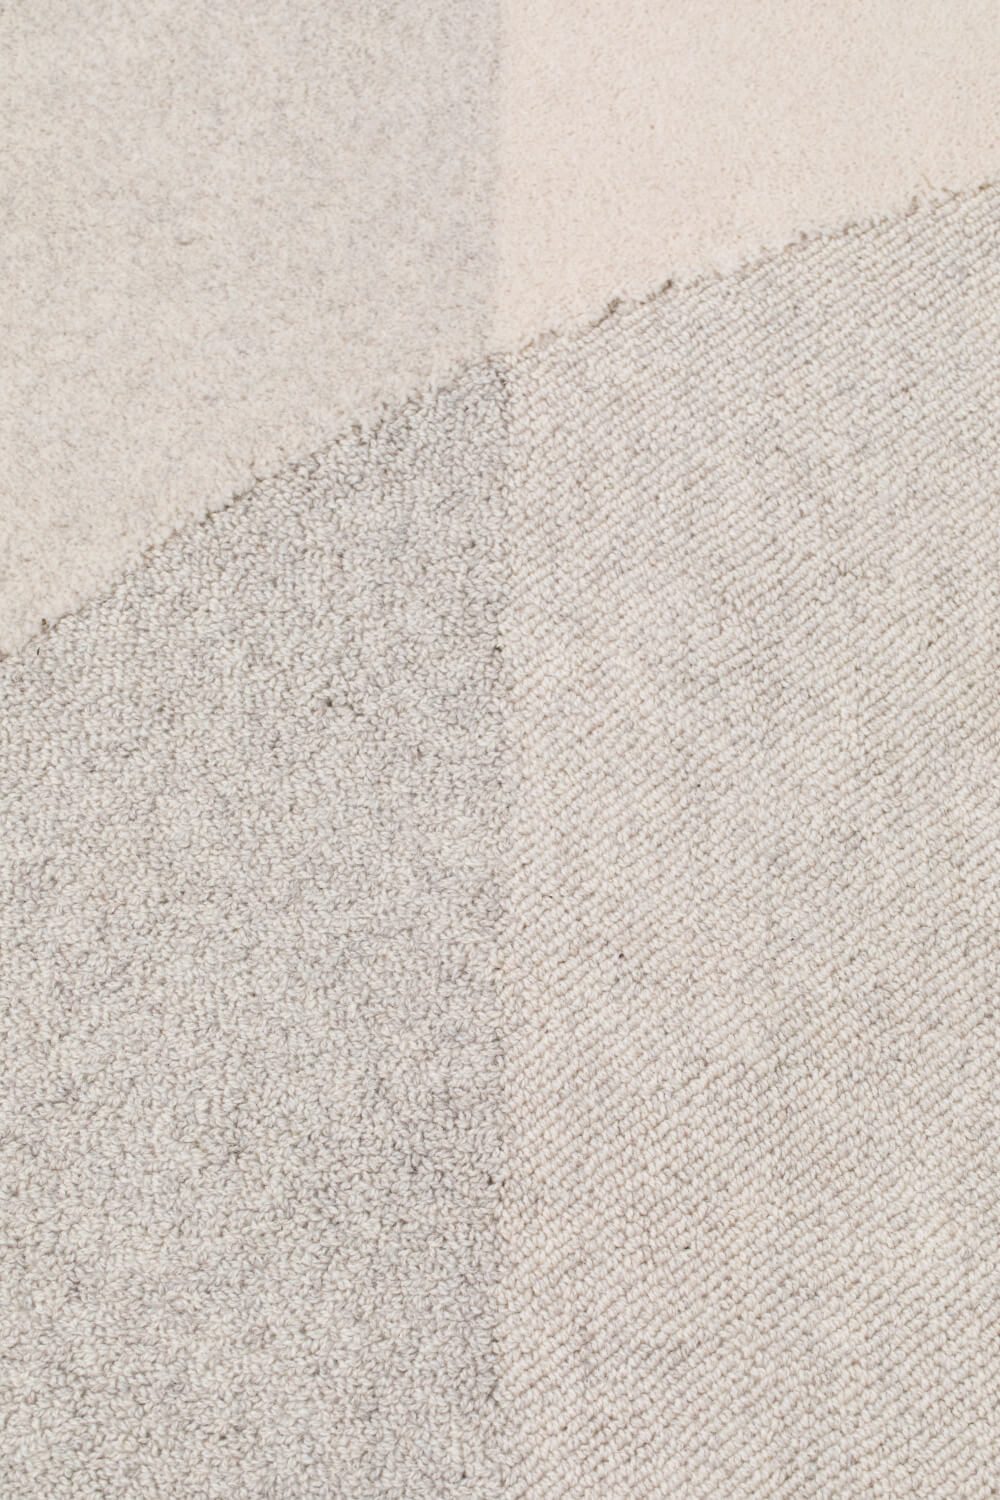 Dream Teppich, 200 x 300 cm, natur / grau